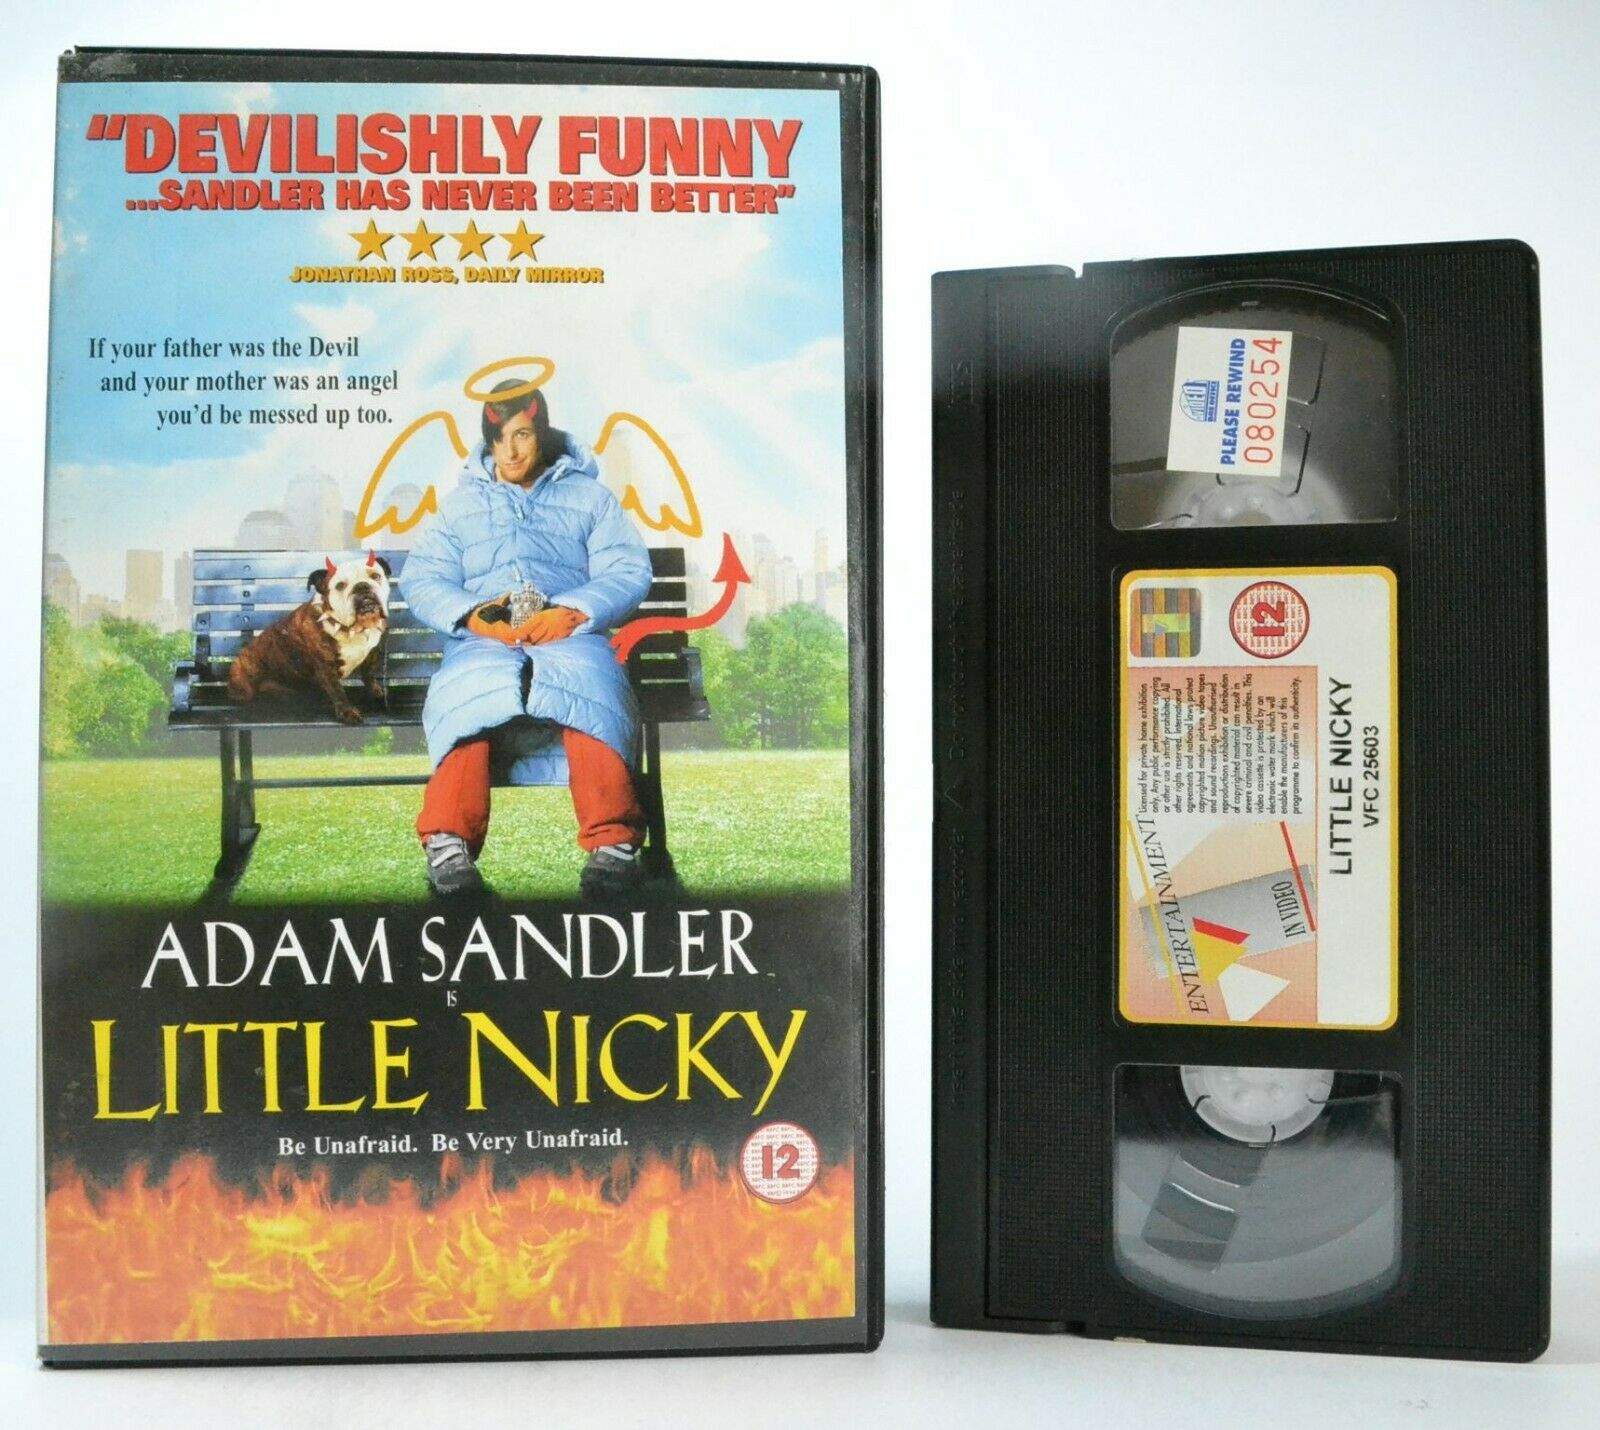 Little Nicky (2000): Satan's Failure Son - Fantasy Comedy - Adam Sandler - VHS-